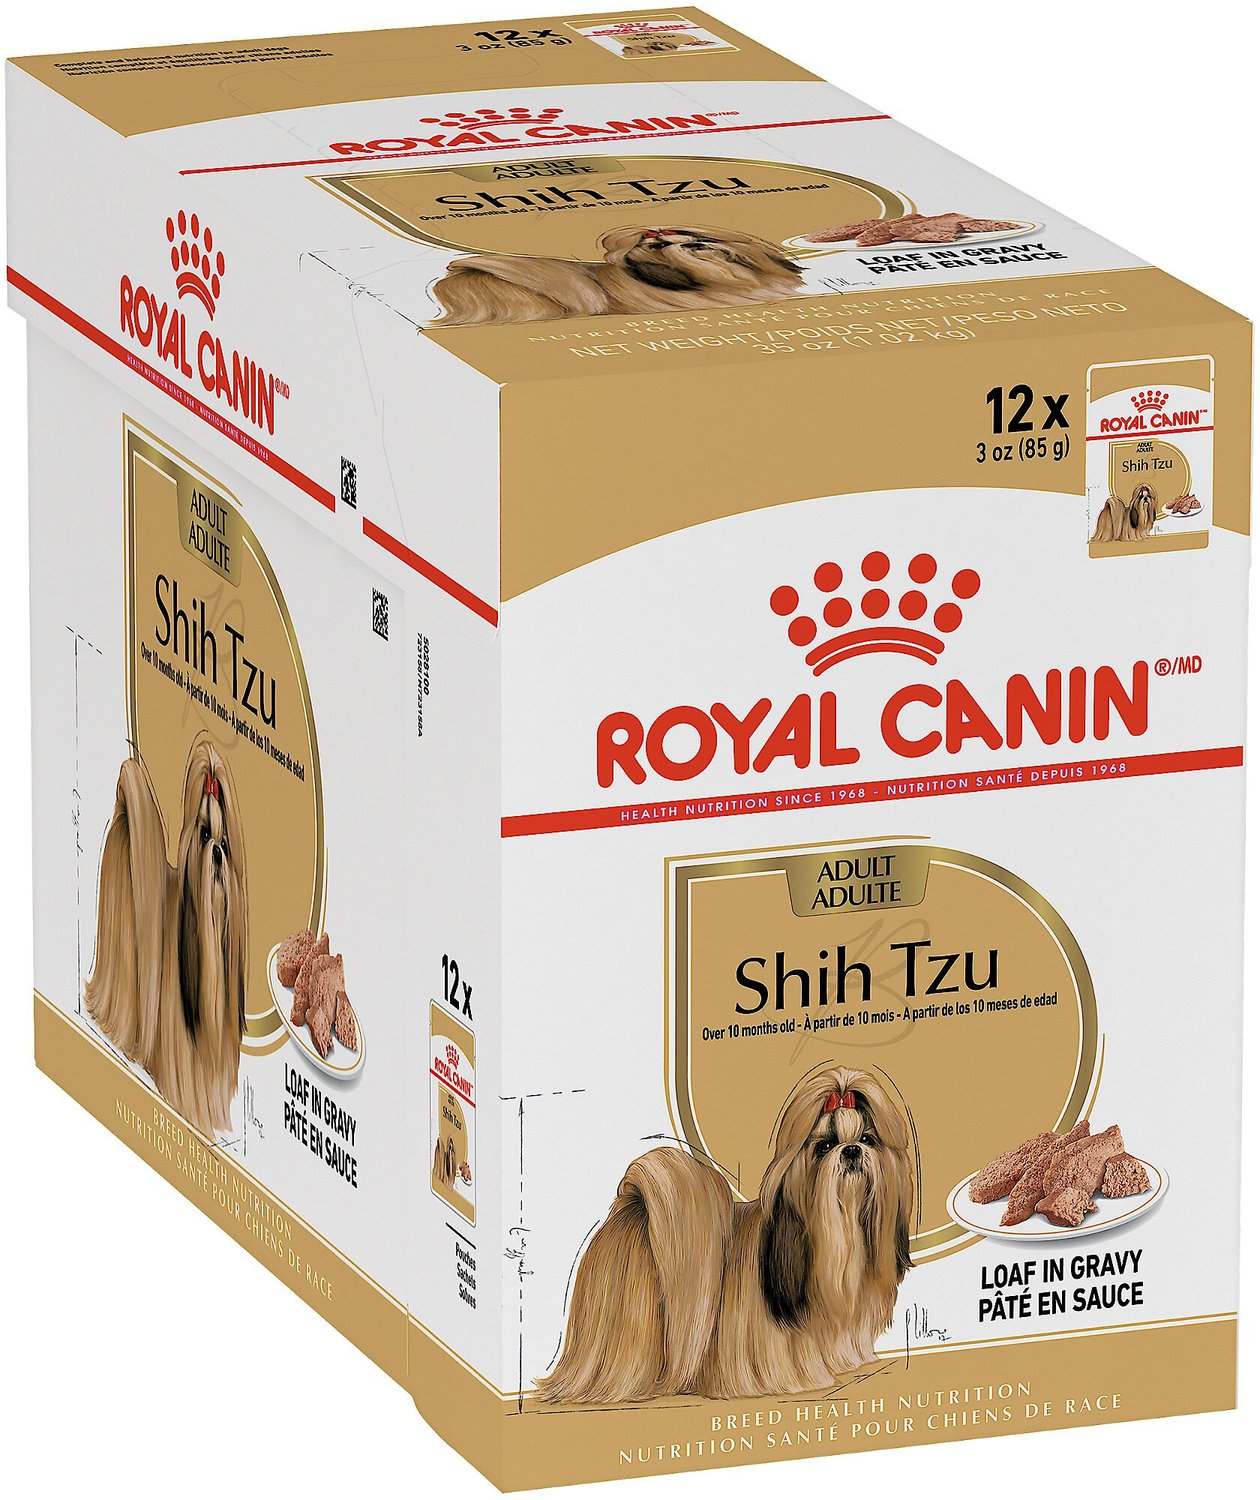 ROYAL CANIN Adult Shih Tzu Wet Dog Food, 3